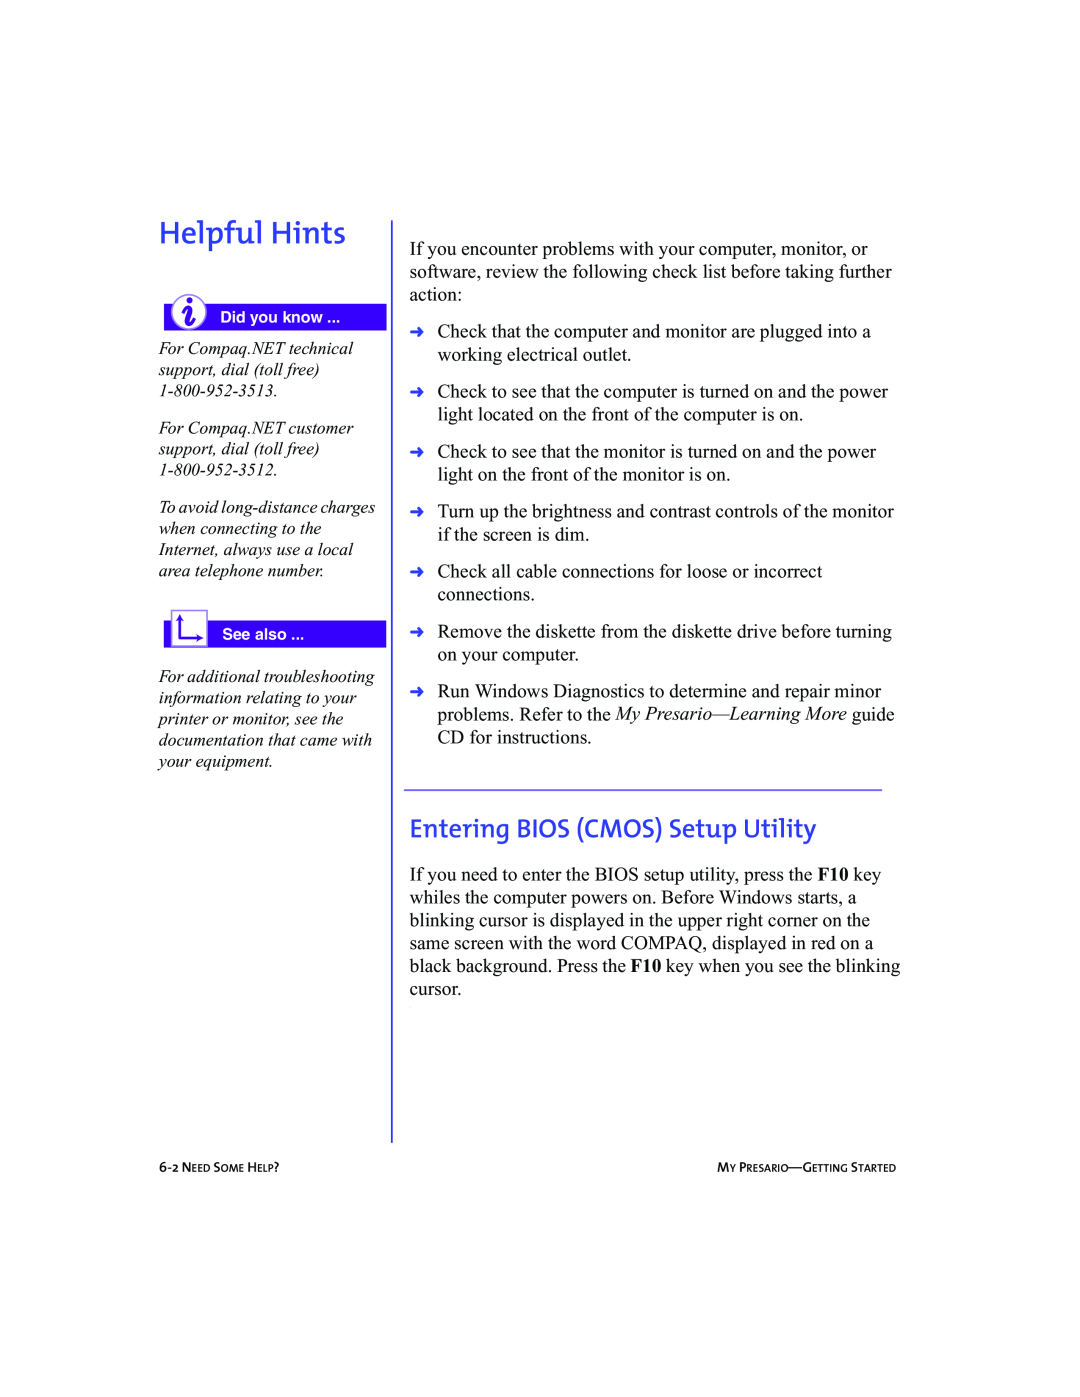 Compaq 5BW474 manual Helpful Hints, Entering BIOS CMOS Setup Utility 